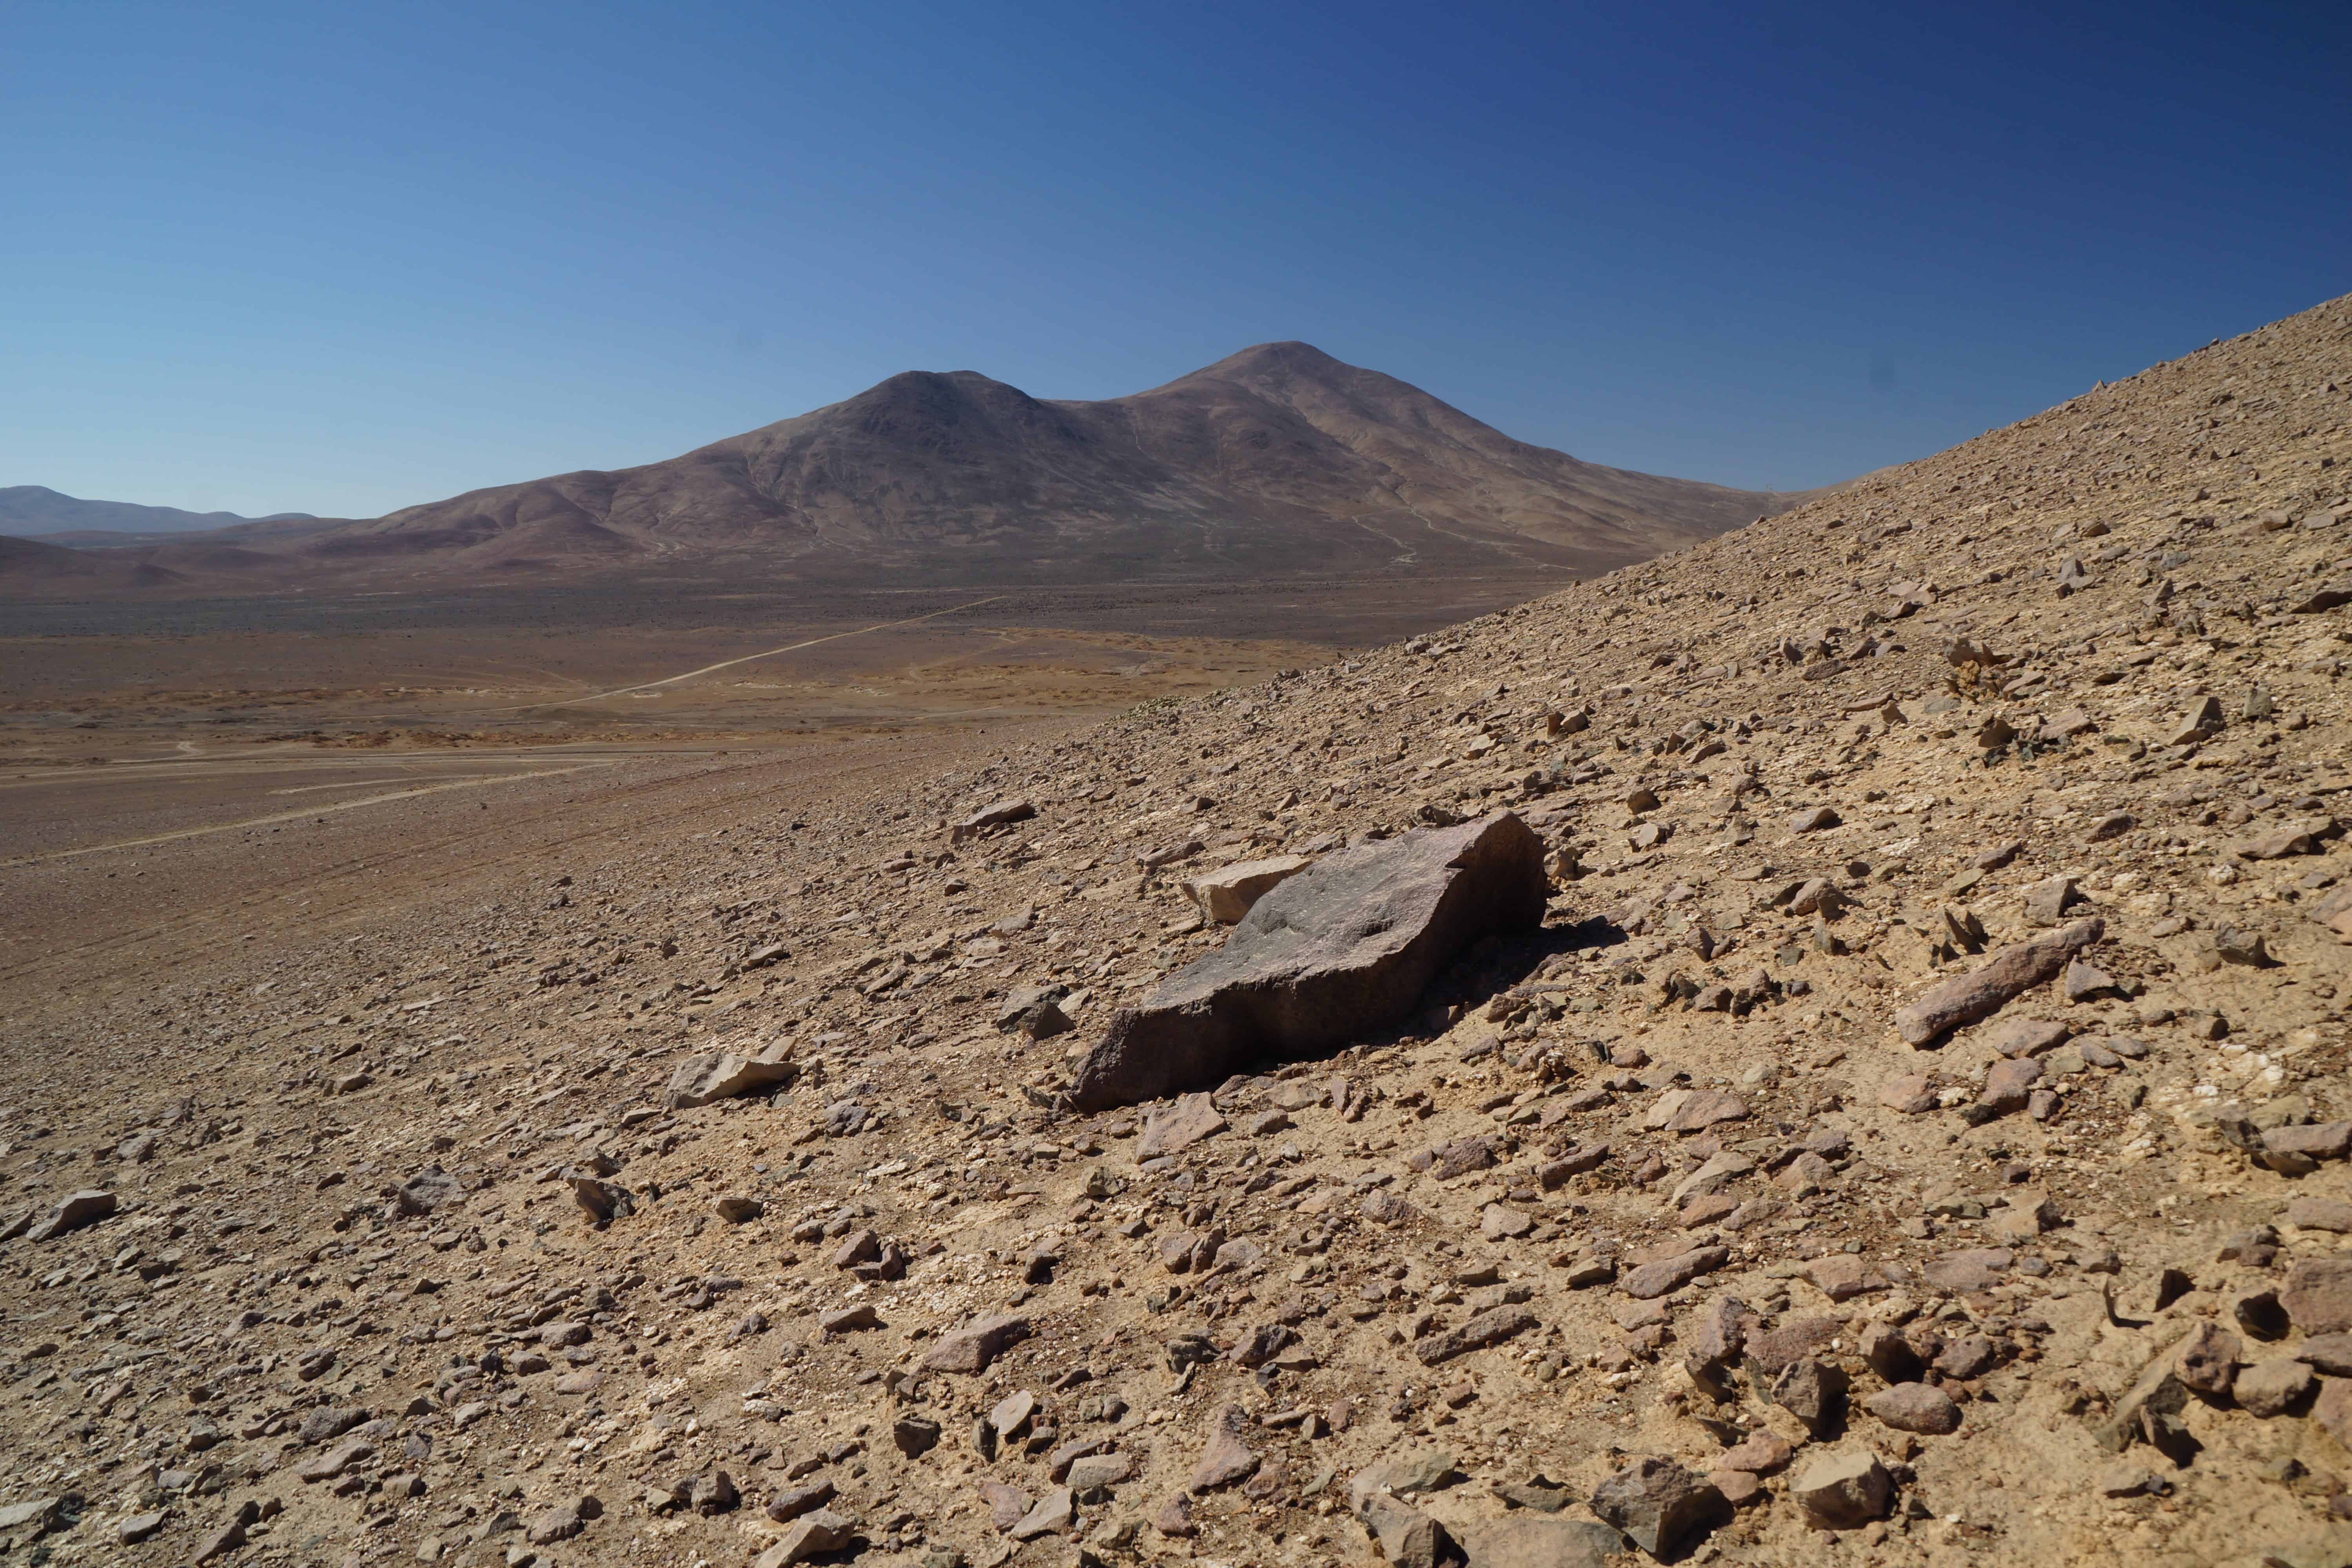 Chile's Atacama Desert is the driest non-polar desert on Earth -- and a ready analog for Mars' rugged, arid terrain. Image Credit: NASA/JPL-Caltech.